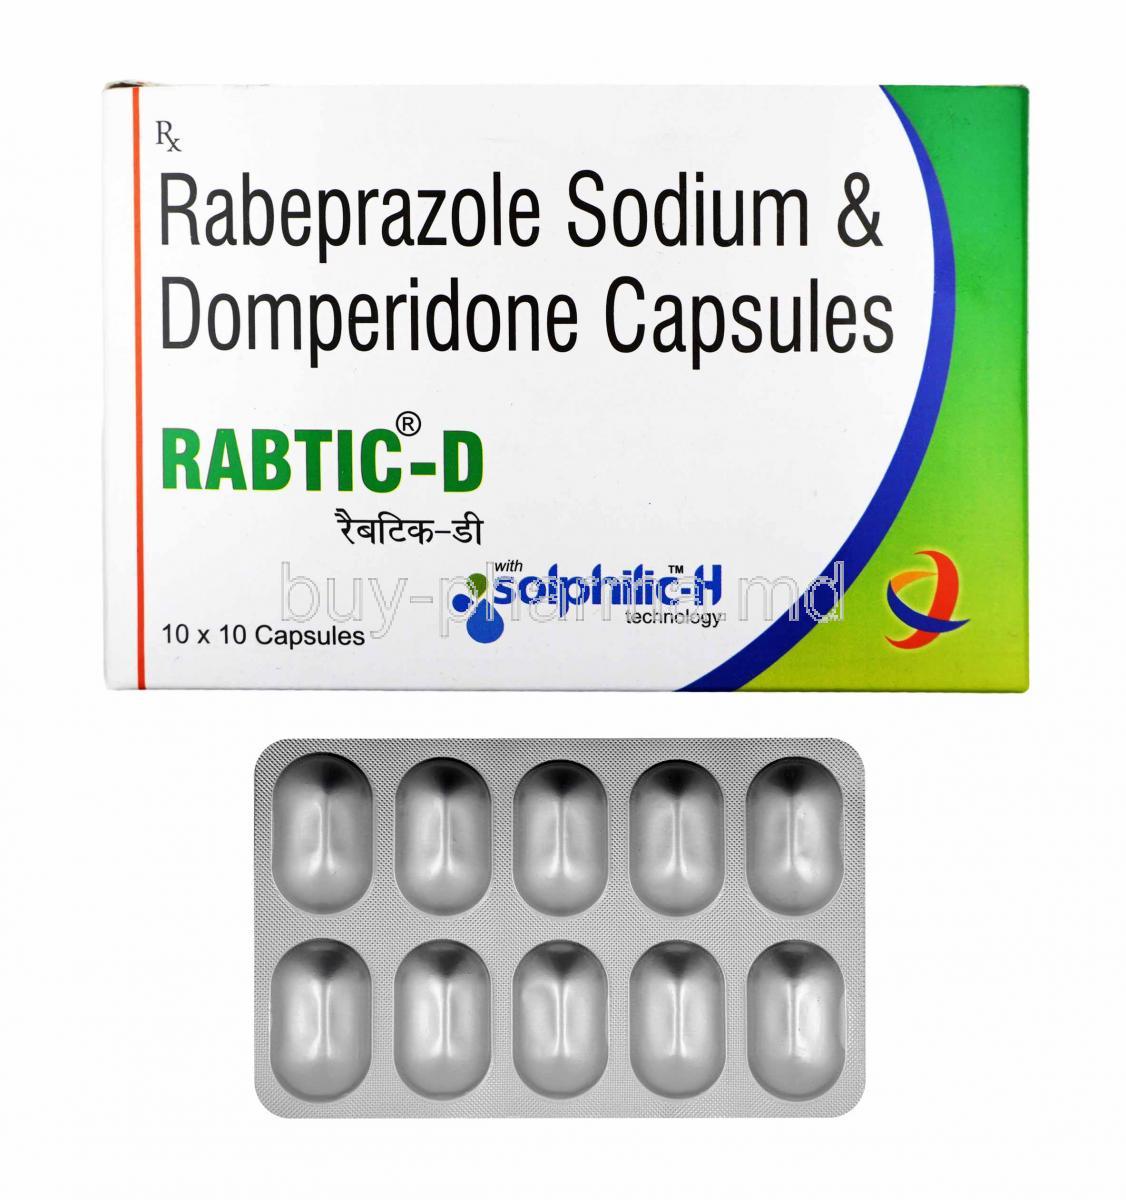 Rabtic-D, Domperidone and Rabeprazole box and capsules